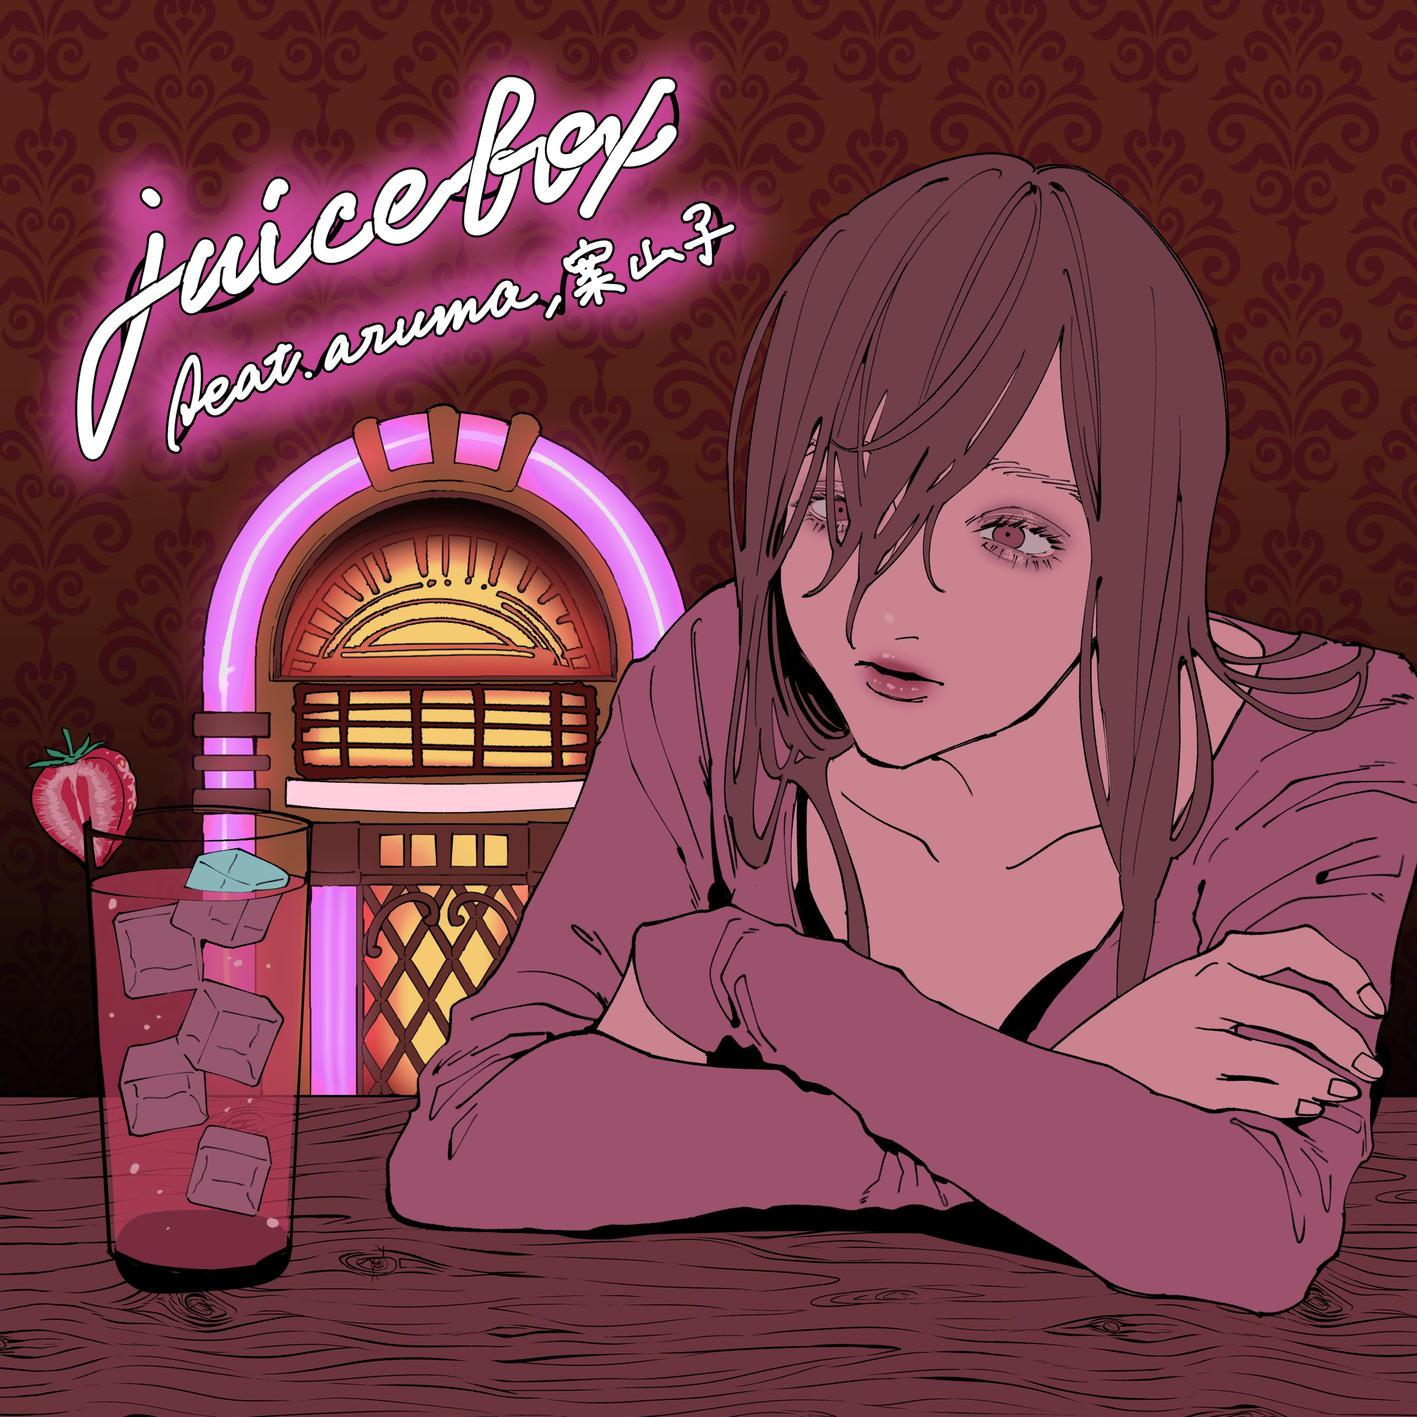 MAISONdes - juice box (feat. aruma & 案山子)